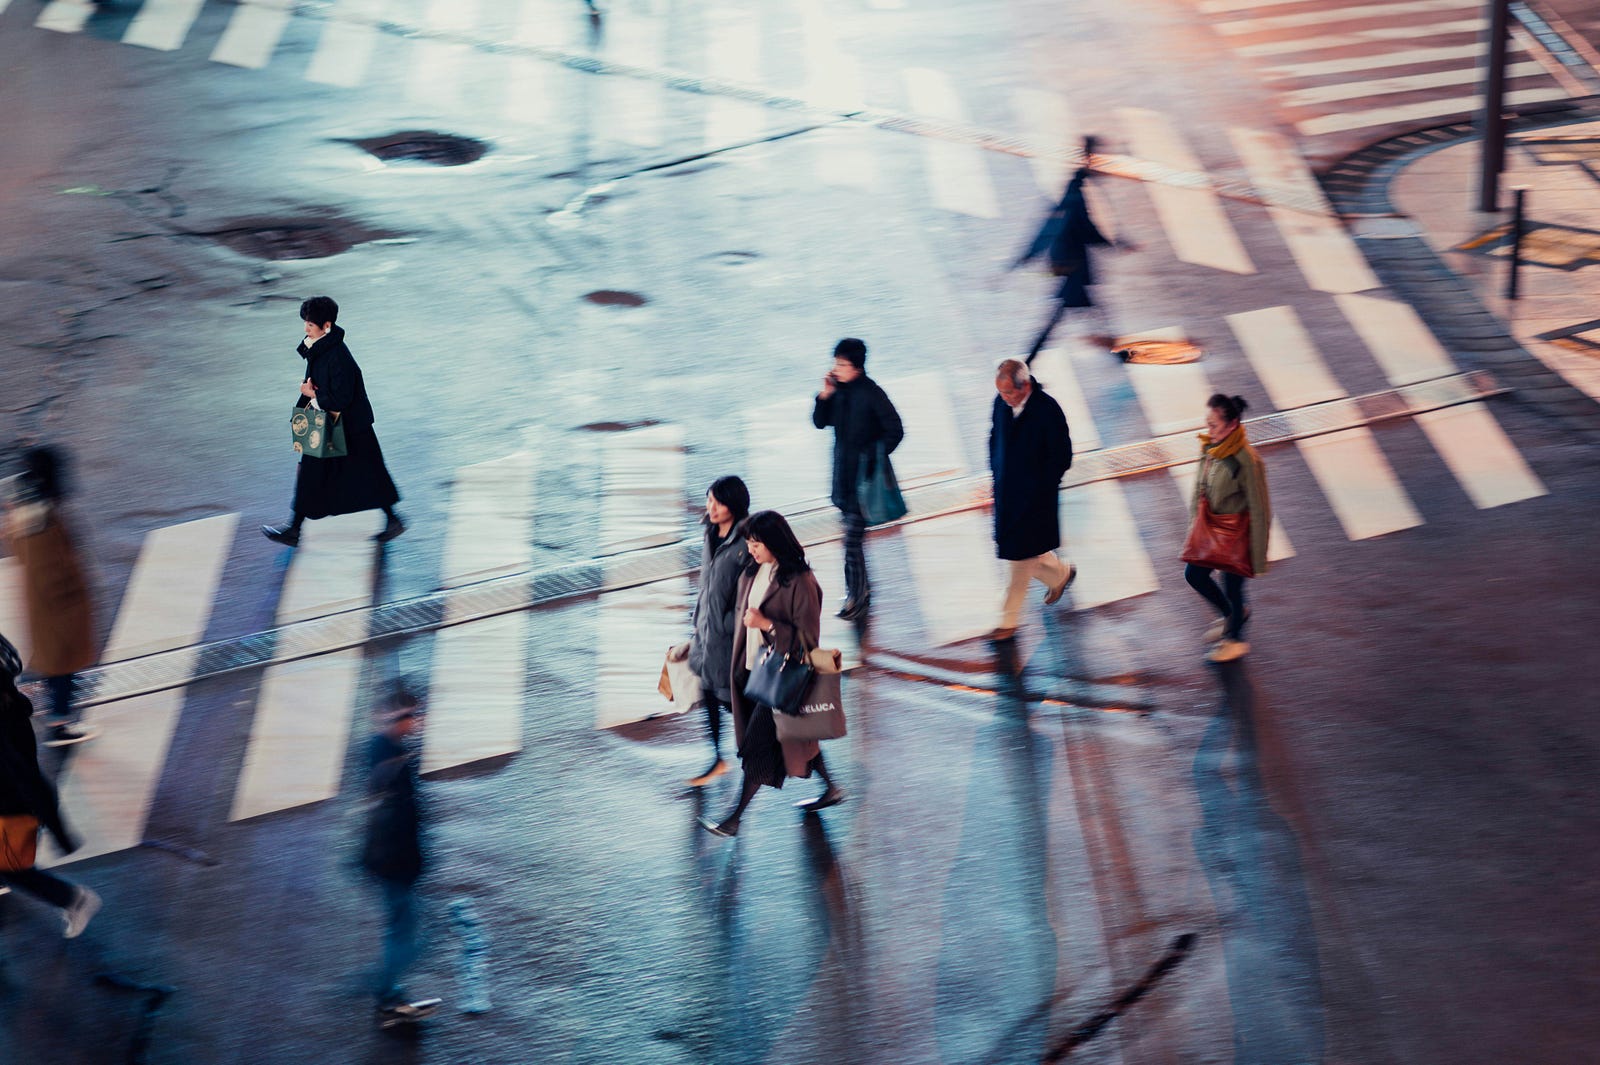 Several Asian people cross a crosswalk.